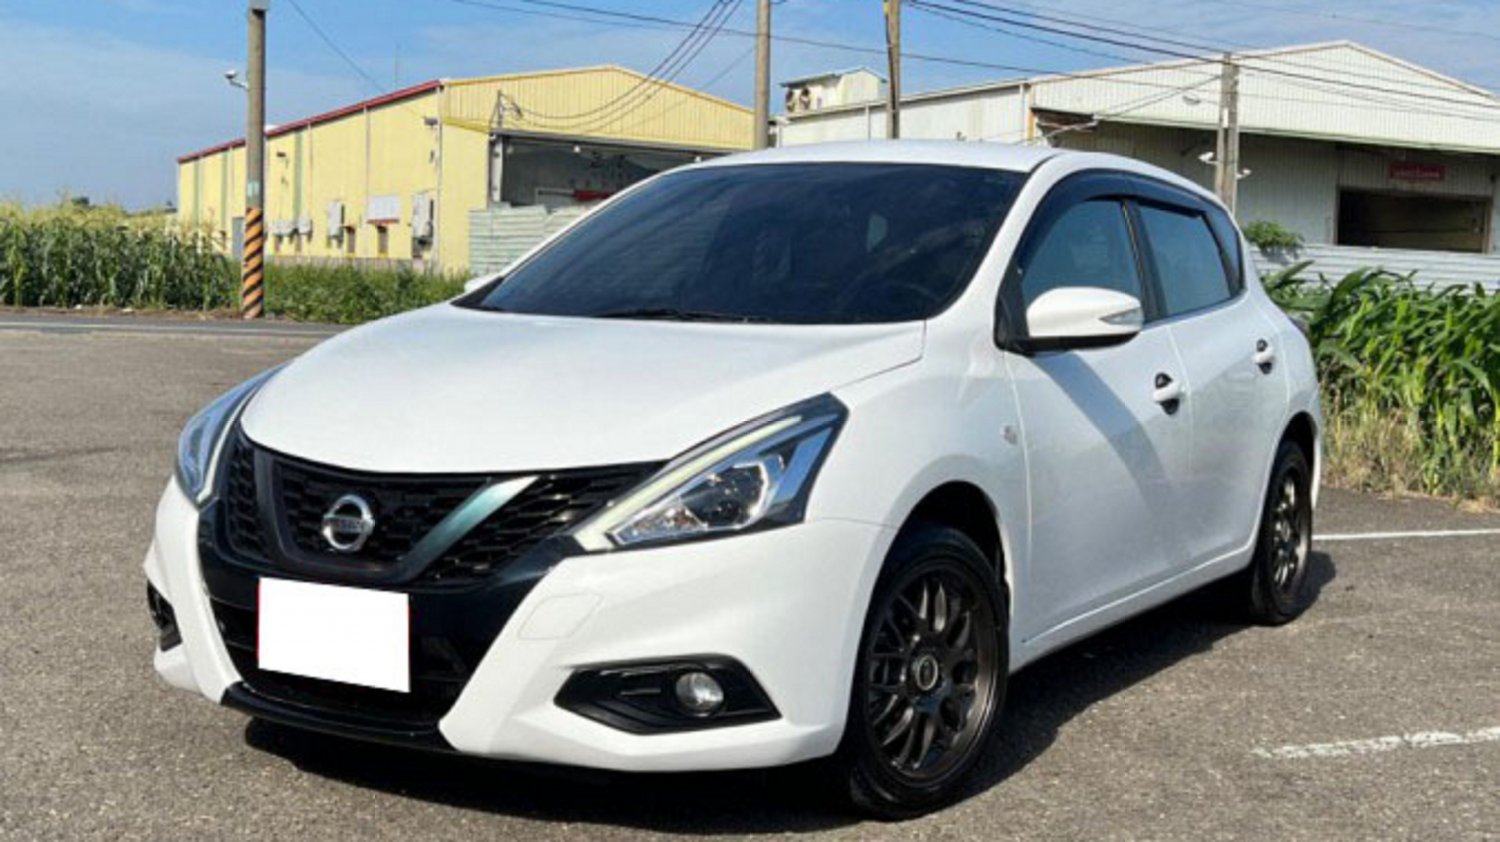 Nissan 日產/Tiida/2019/1600c.c/528汽車(台南)